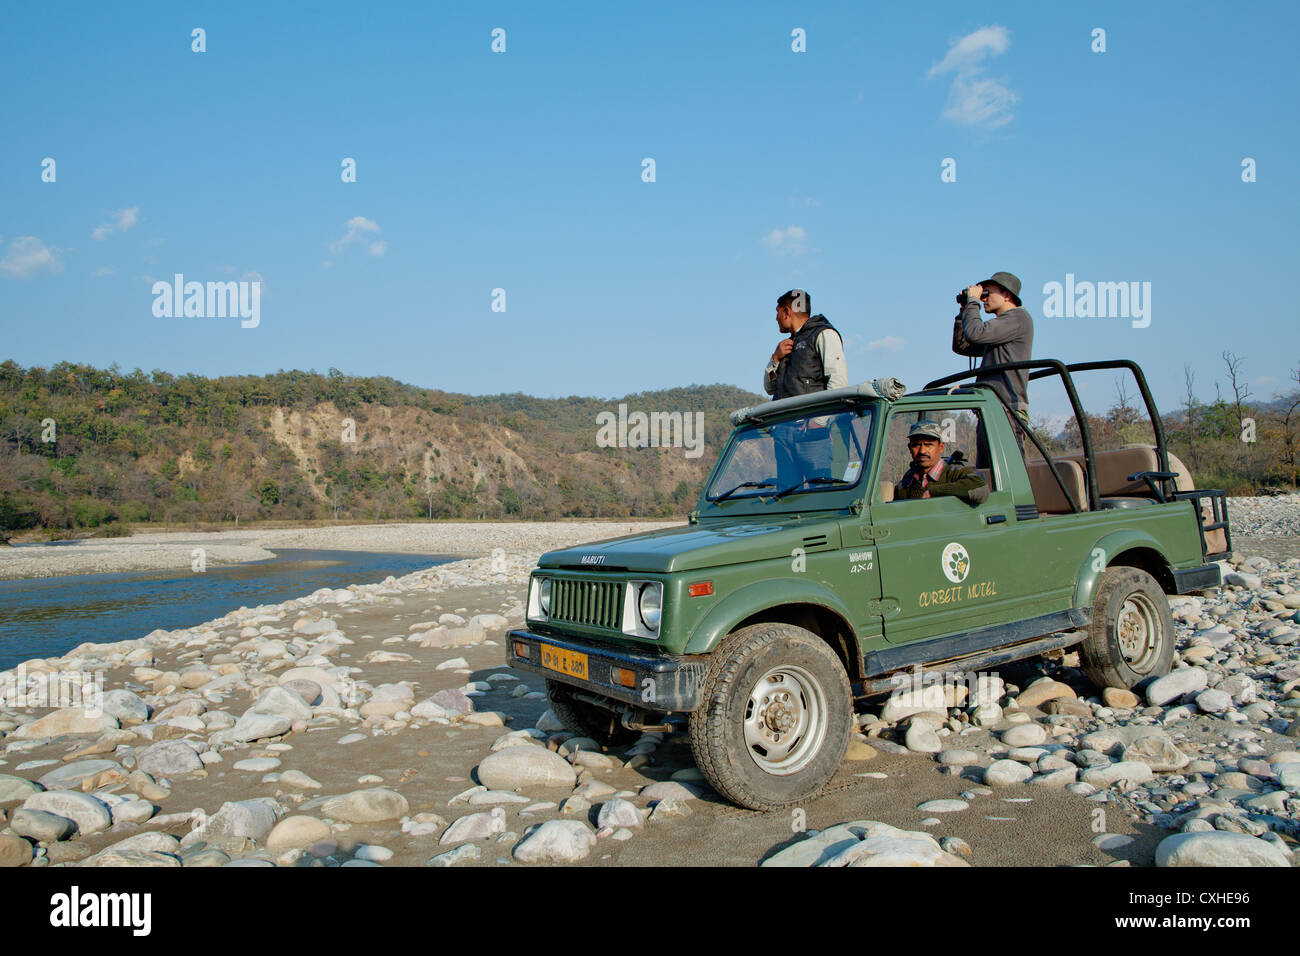 Tourist spotting wildlife on the bank of Ramganga river in Jim Corbett Tiger Reserve, India. Stock Photo